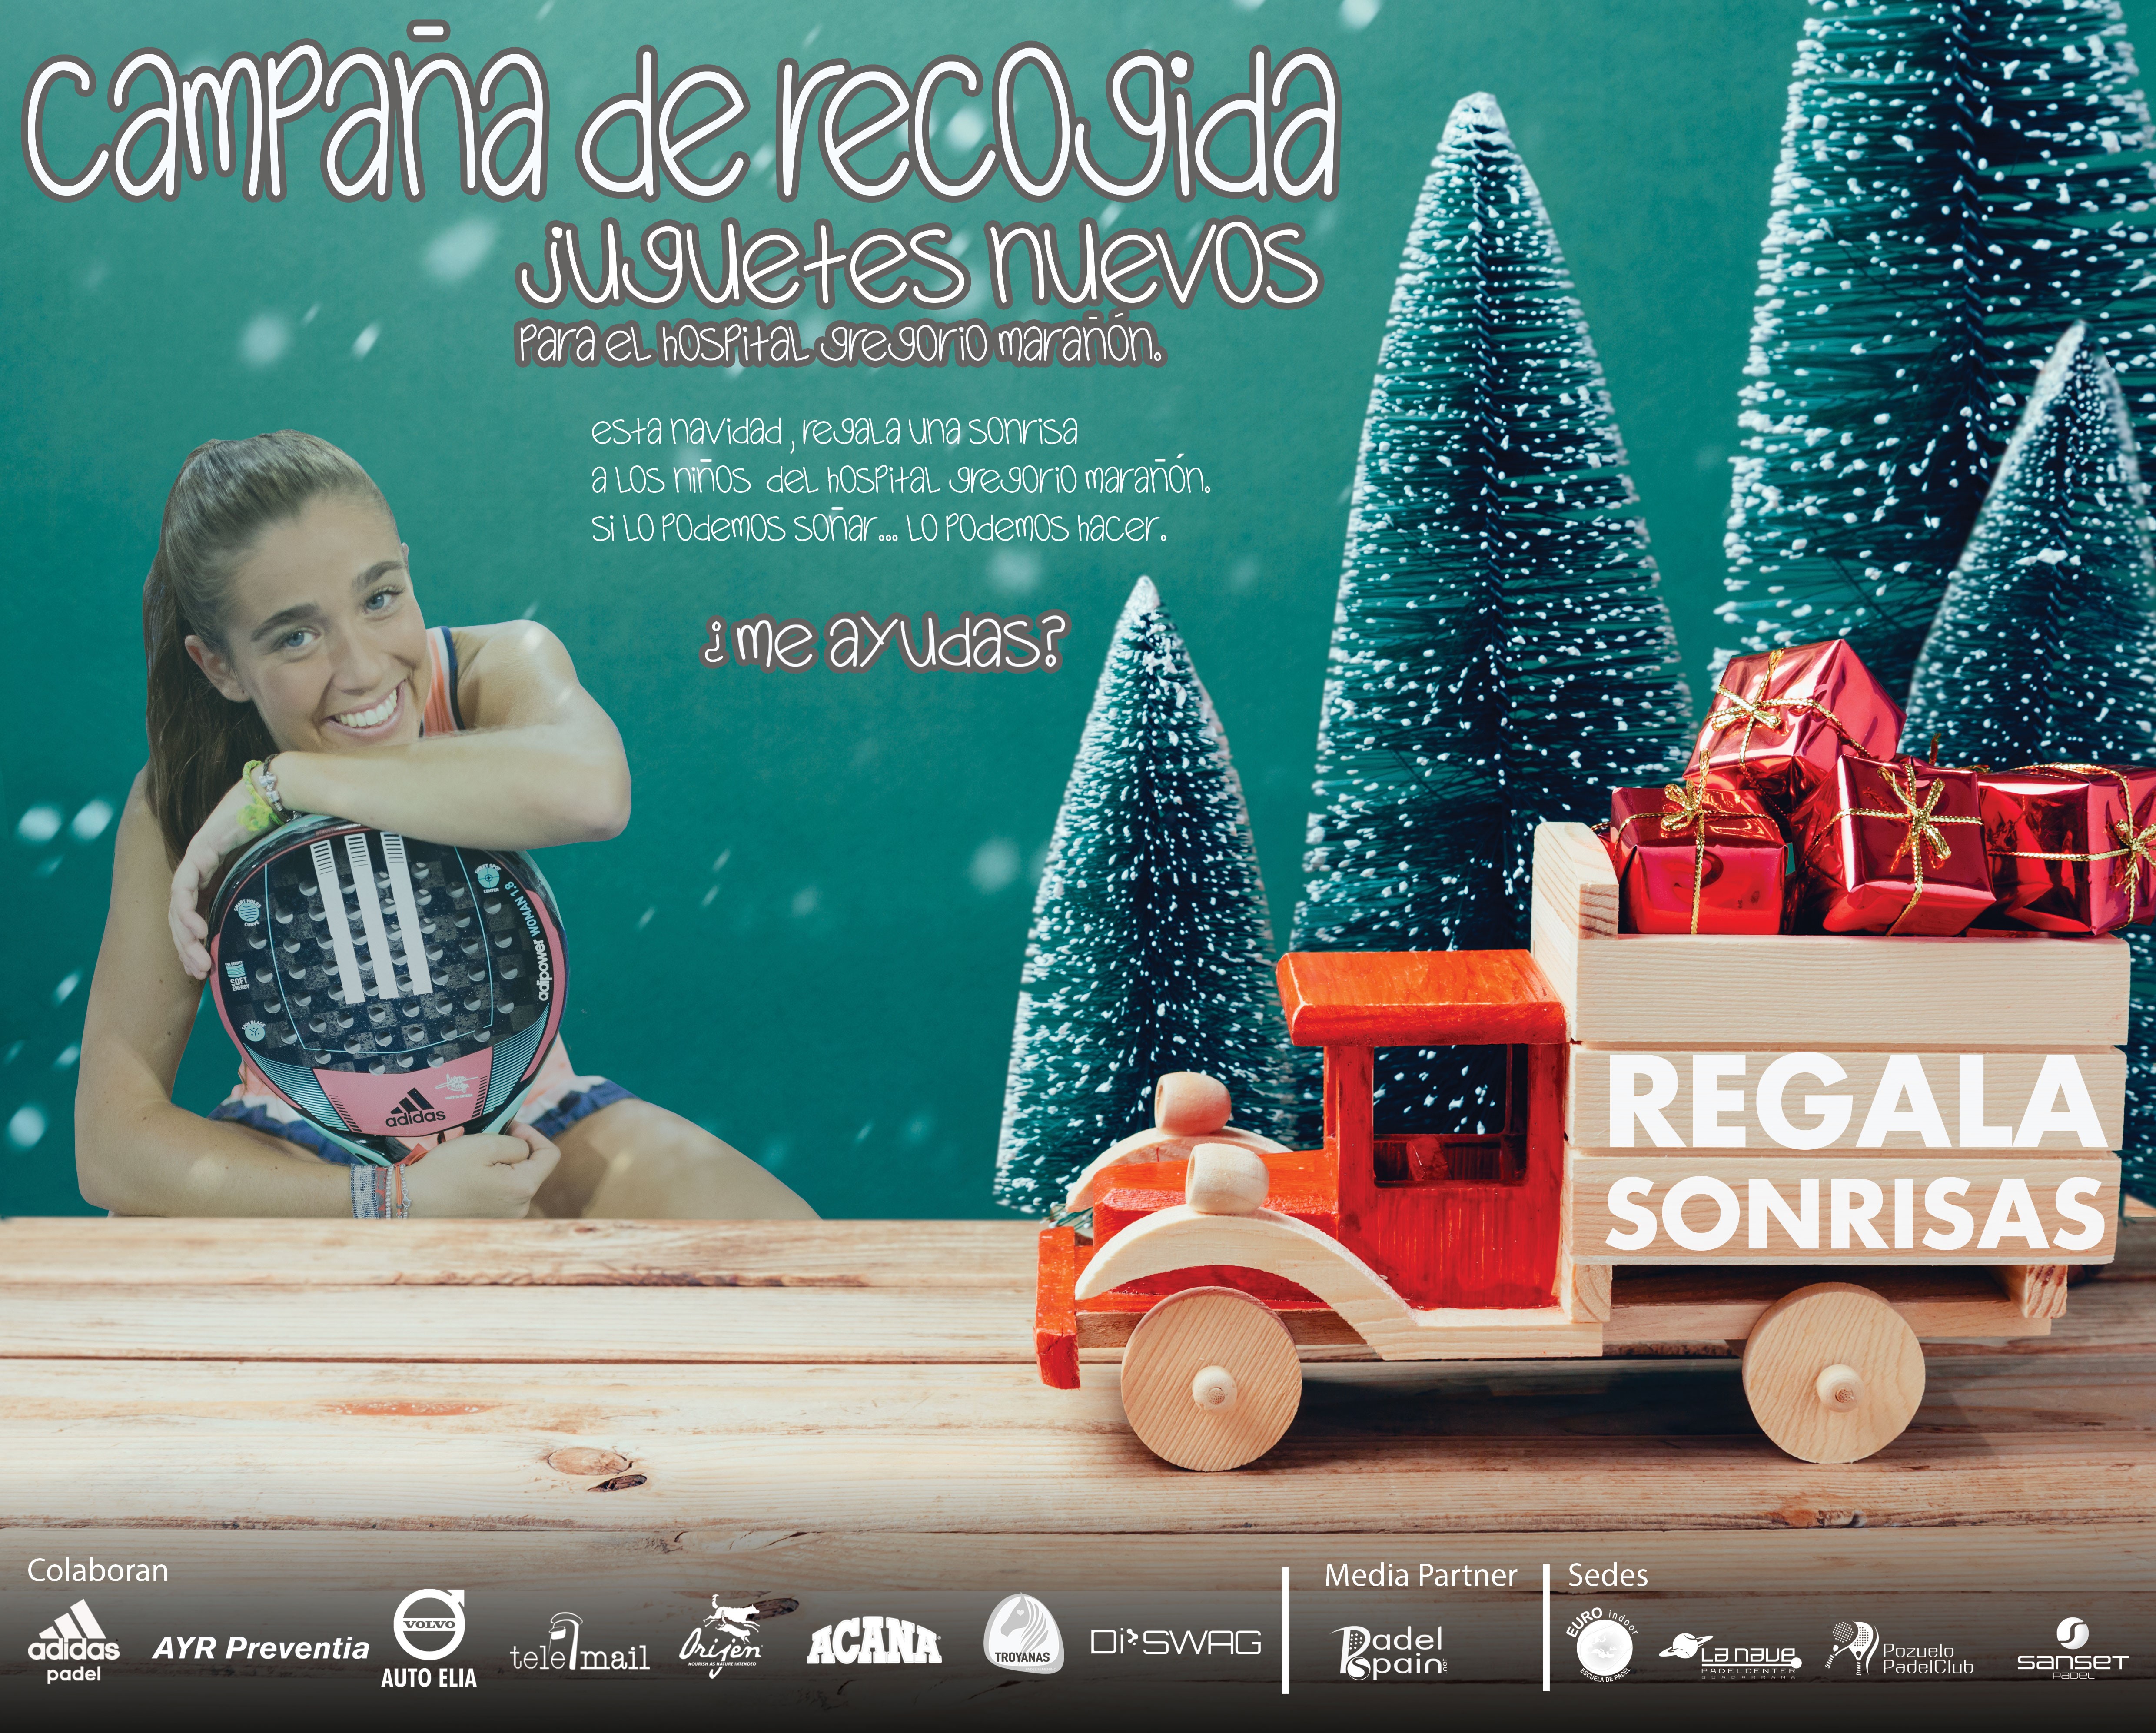 Campaa recogida juguetes Martita Ortega 2018